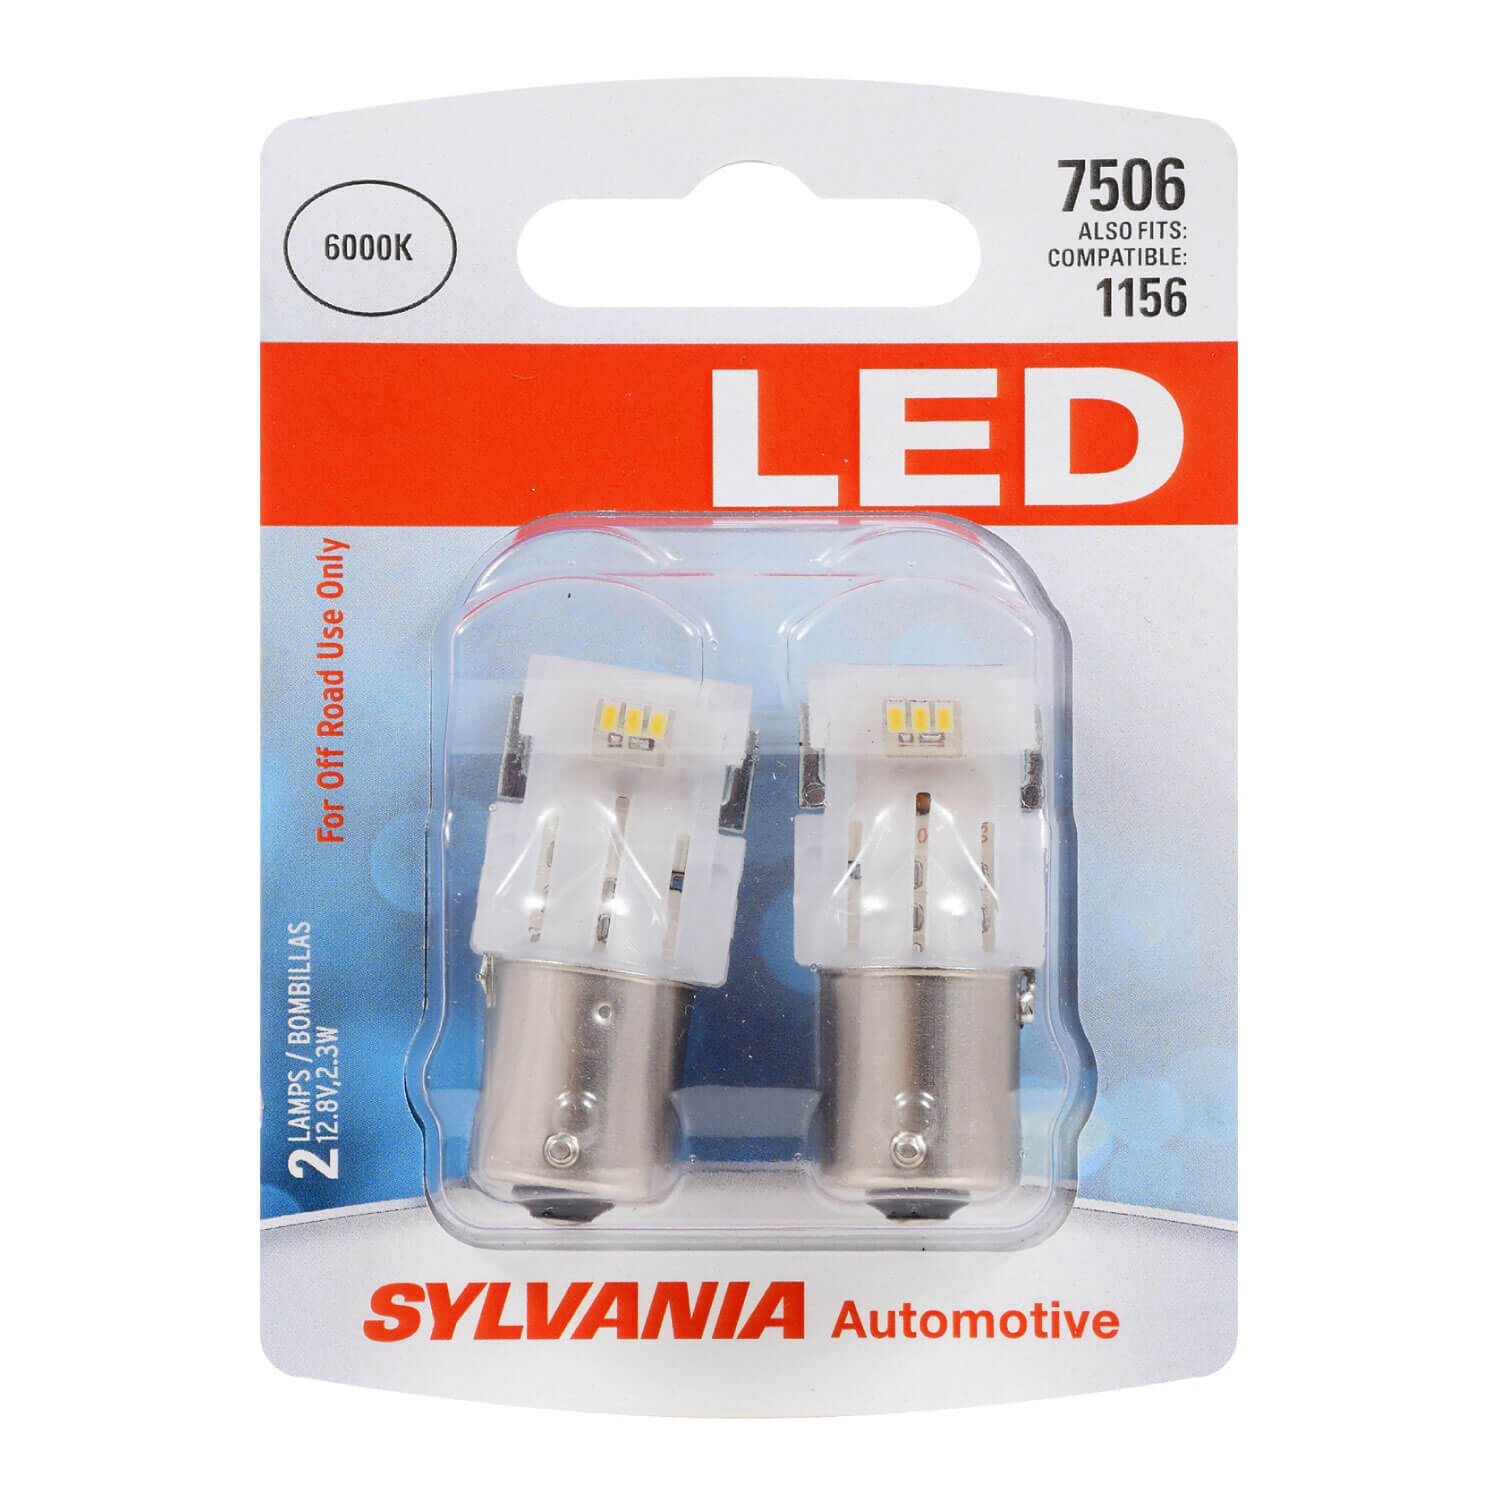 Contains 2 Bulbs Bright LED Bulb Ideal for Park and Turn Lights SYLVANIA 7506 LED Amber Mini Bulb 